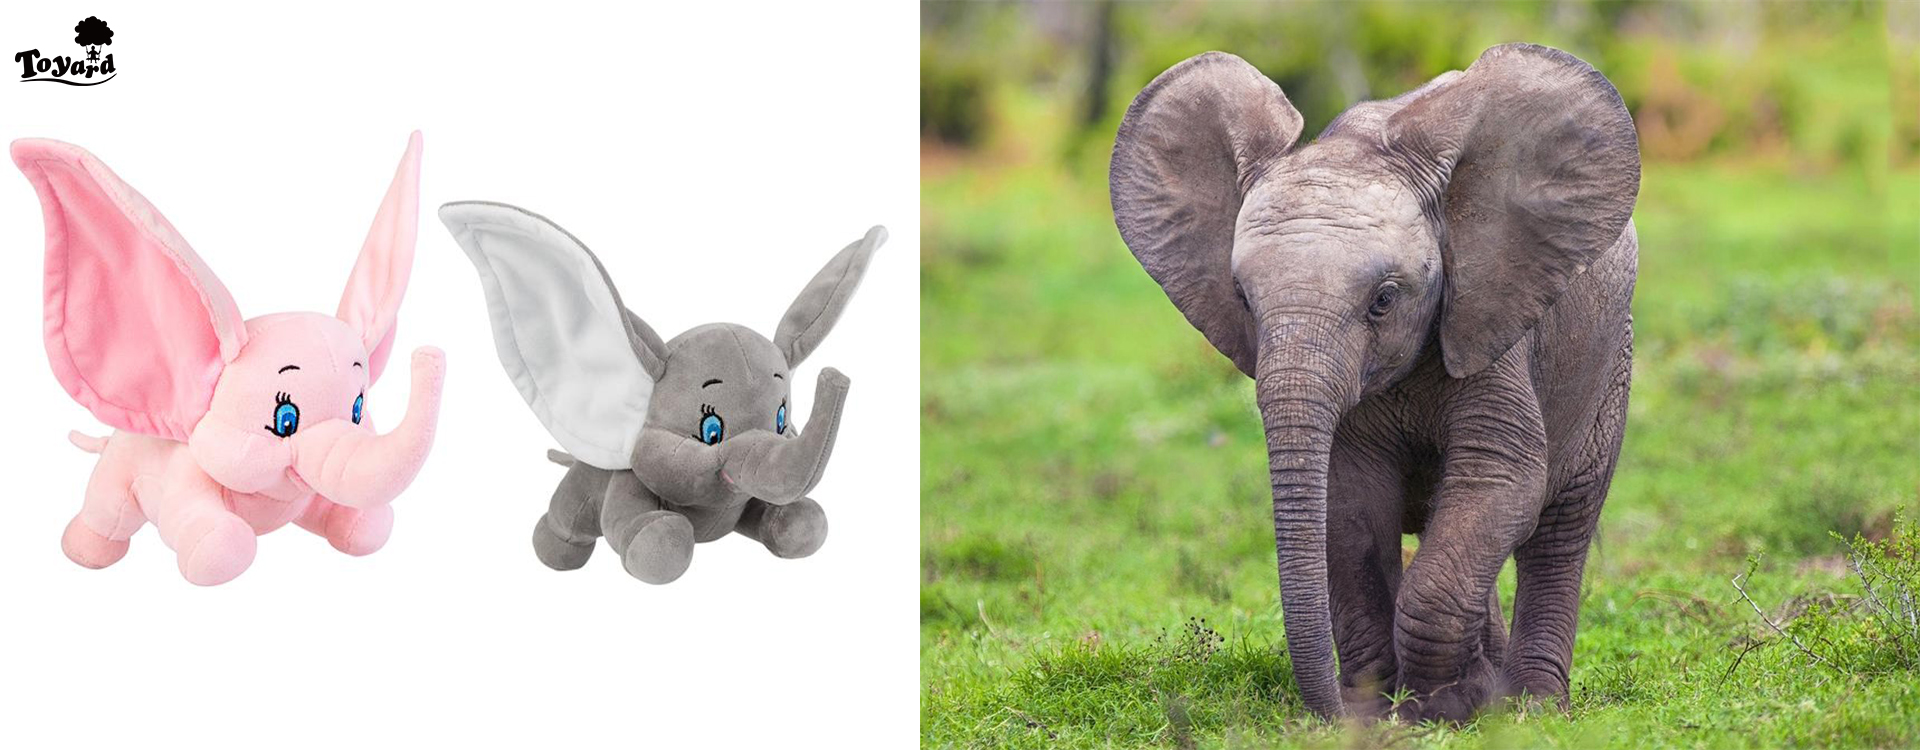 mini elephant plush have high quality